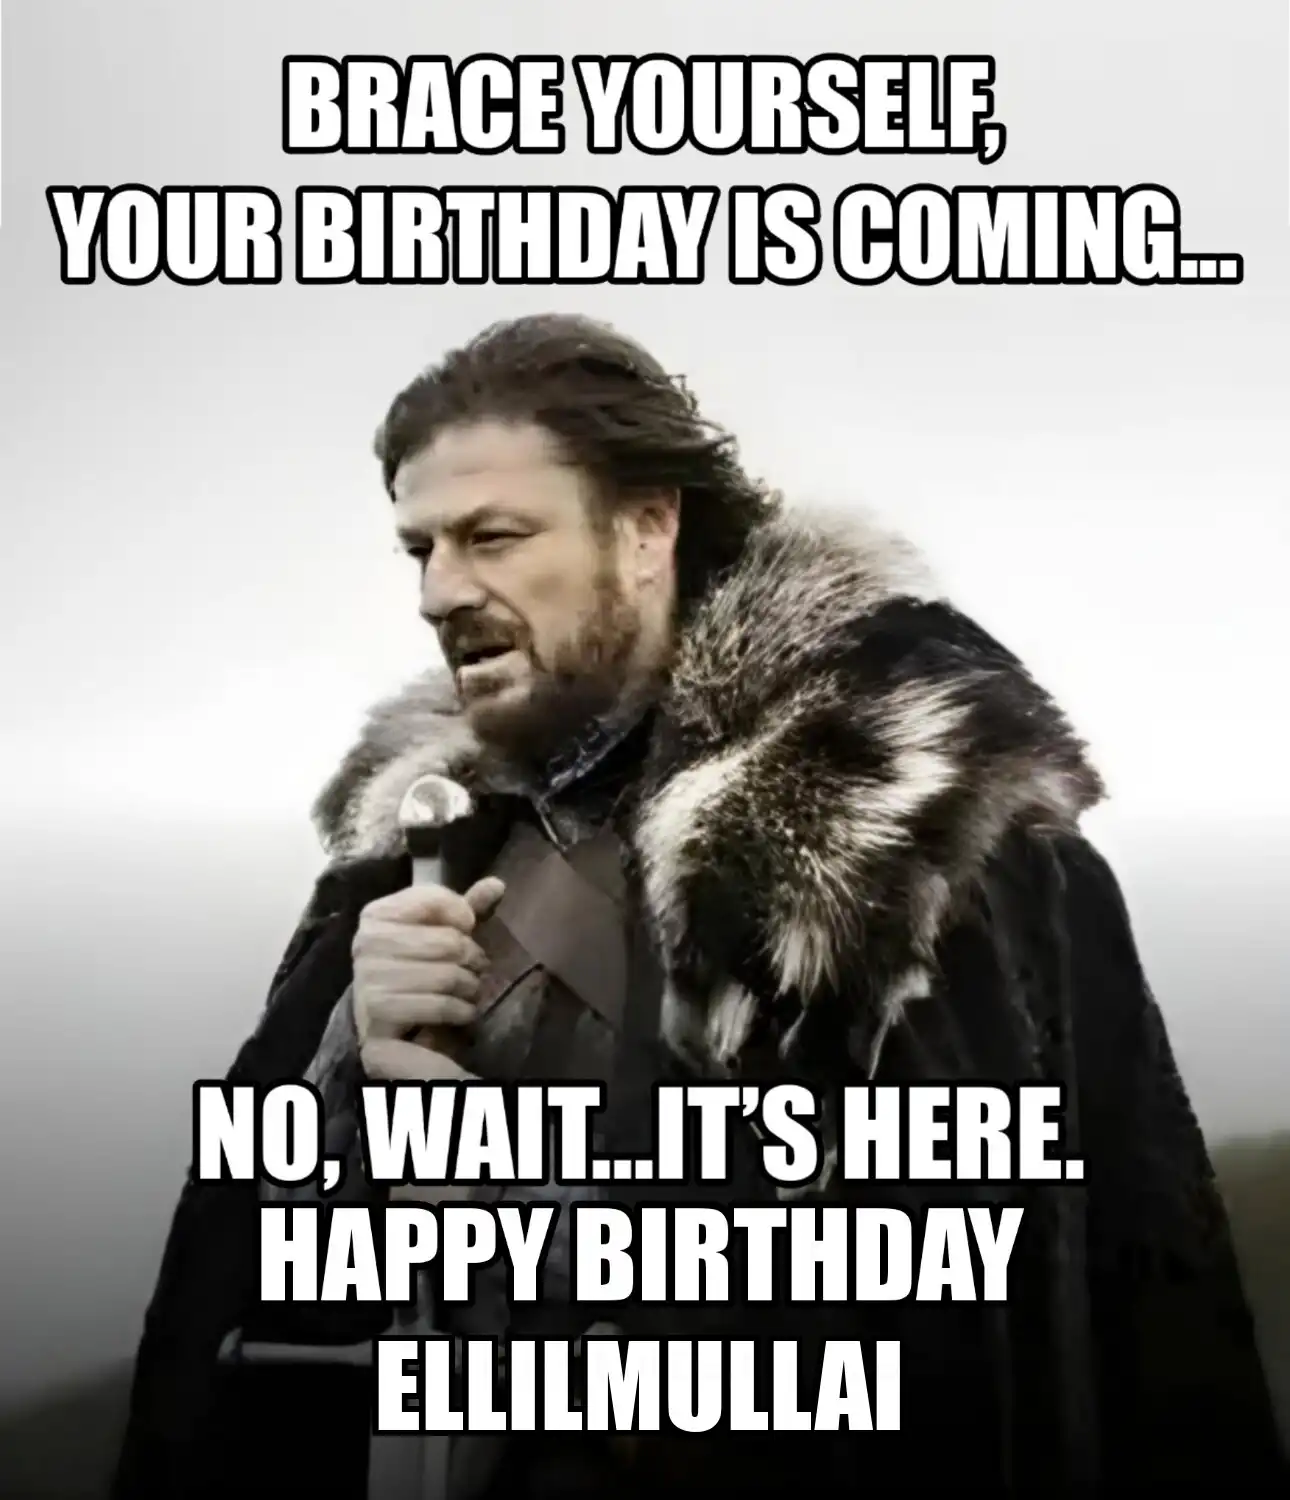 Happy Birthday Ellilmullai Brace Yourself Your Birthday Is Coming Meme